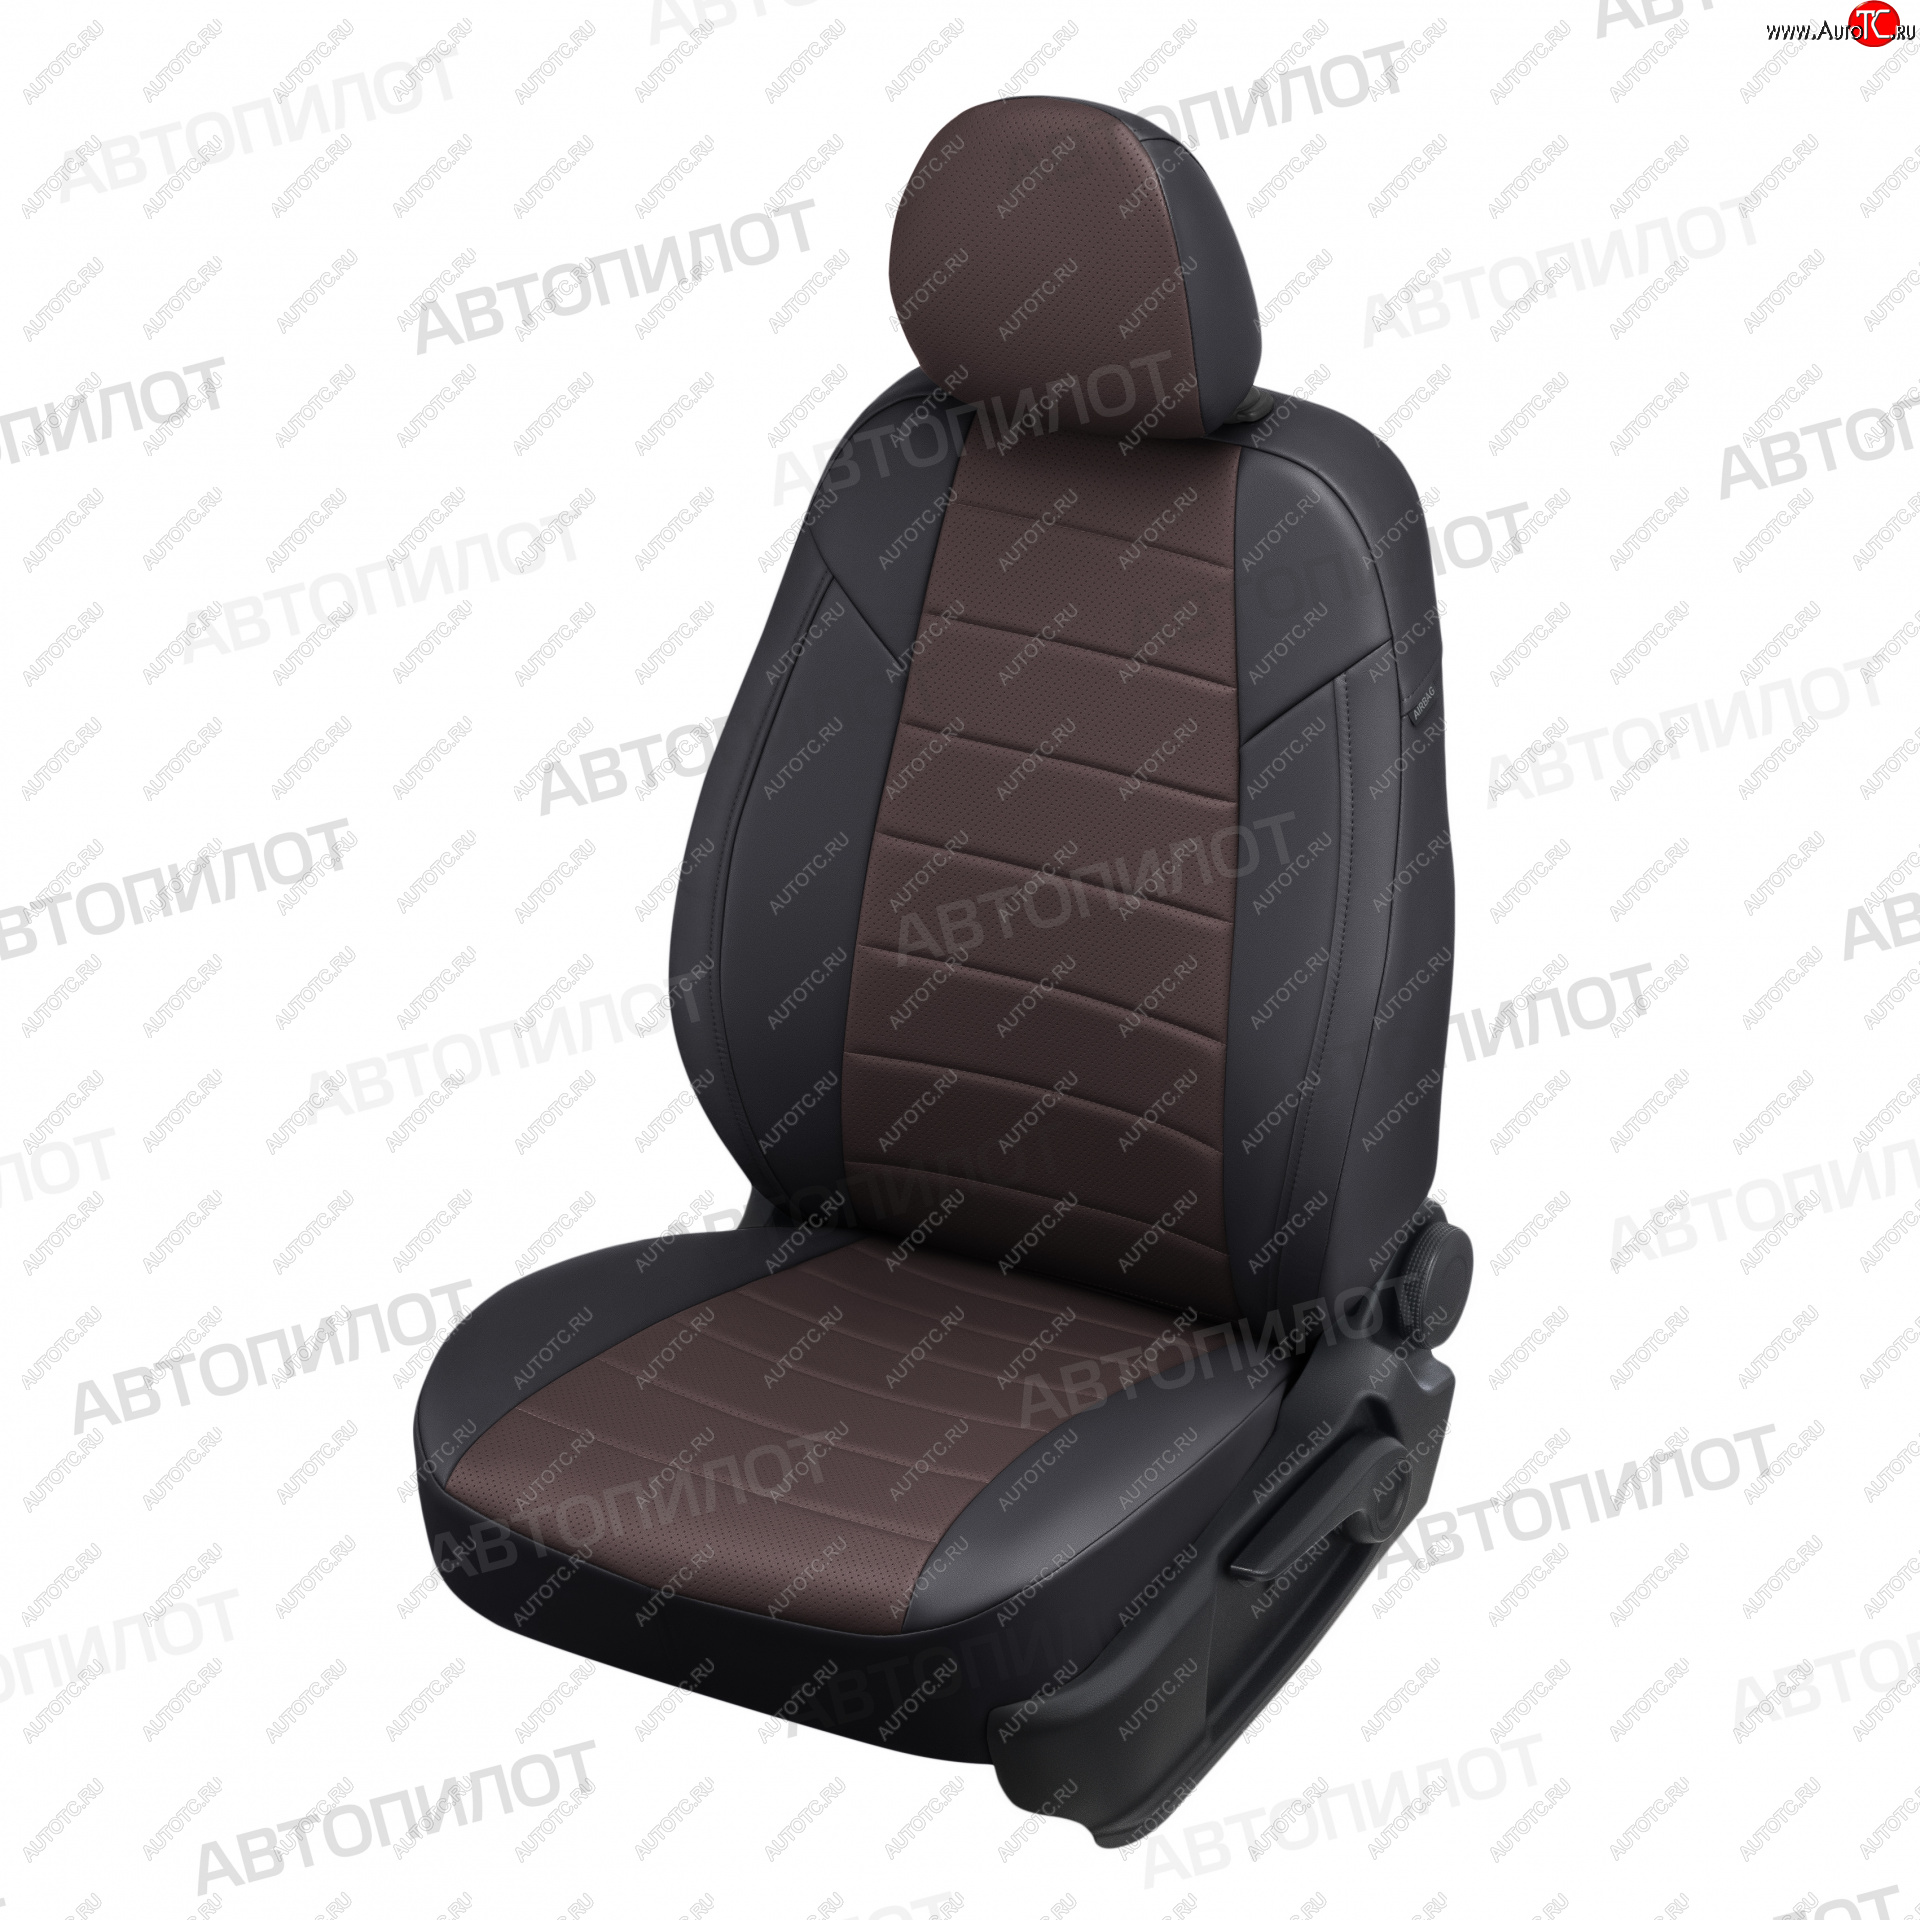 13 449 р. Чехлы сидений (экокожа) Автопилот  KIA Sportage  2 JE,KM (2008-2010) (черный/шоколад)